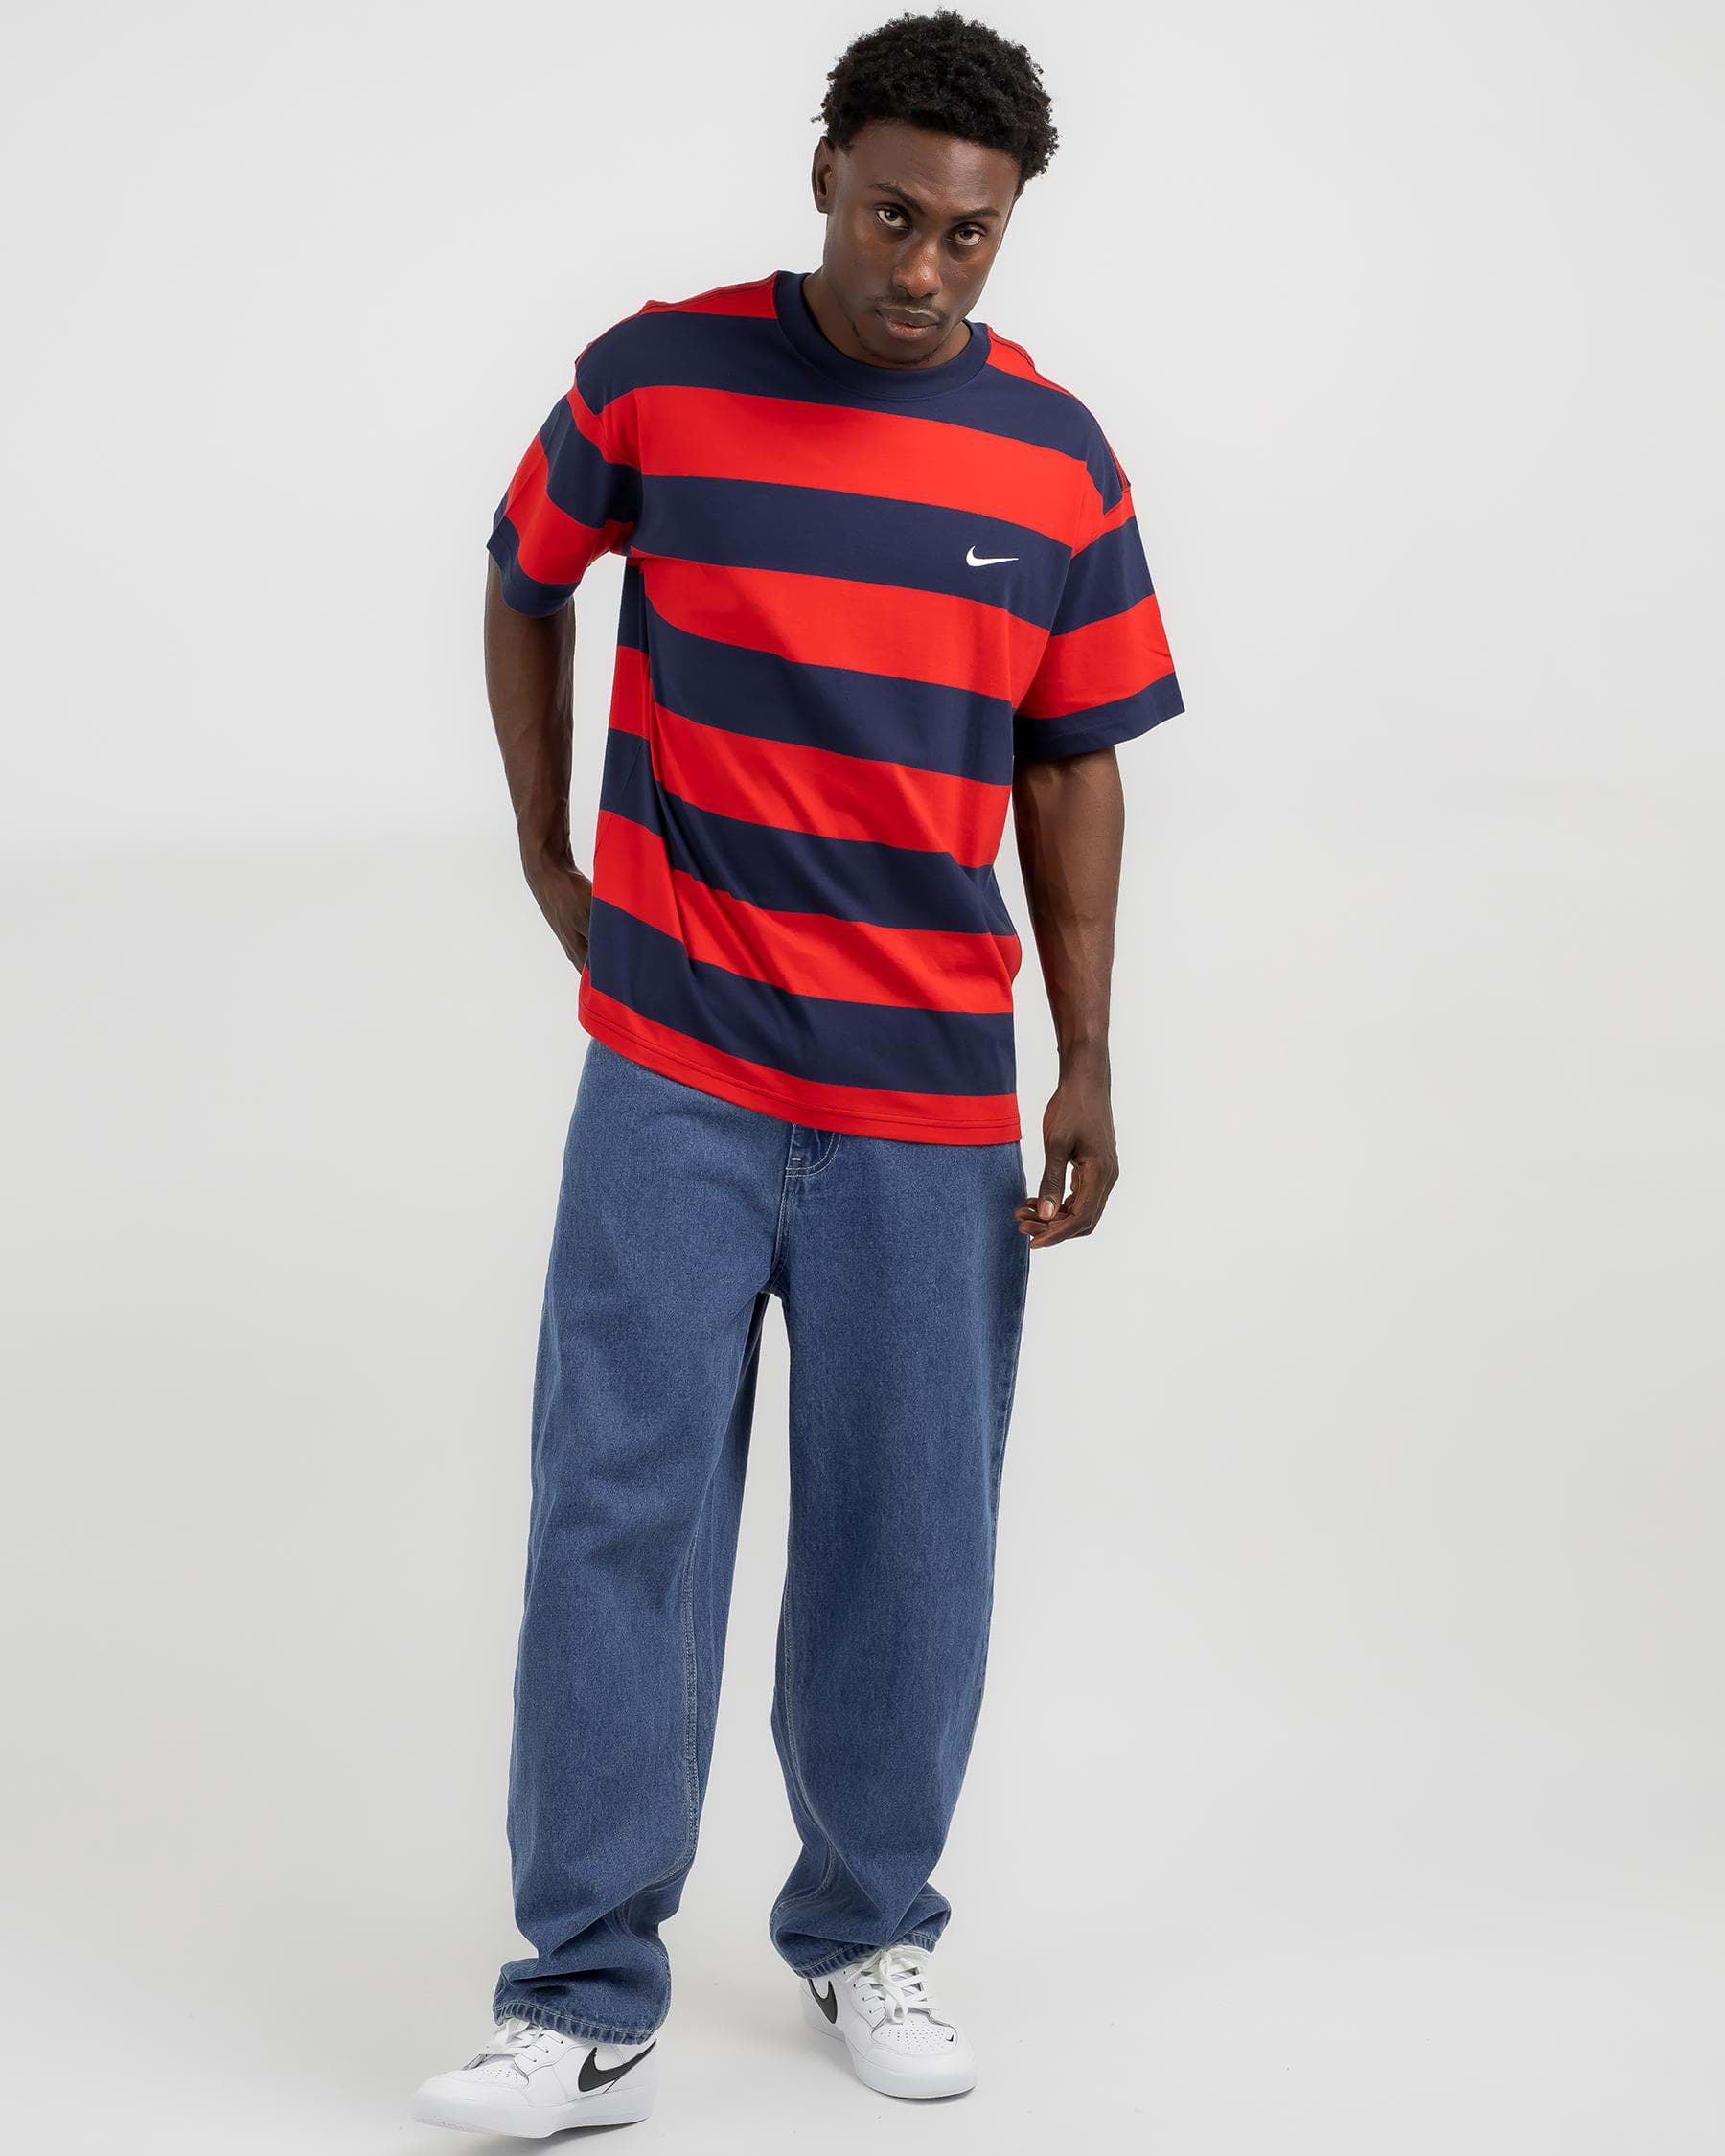 Shop Nike SB Stripe T-Shirt In University Red - Fast Shipping & Easy ...